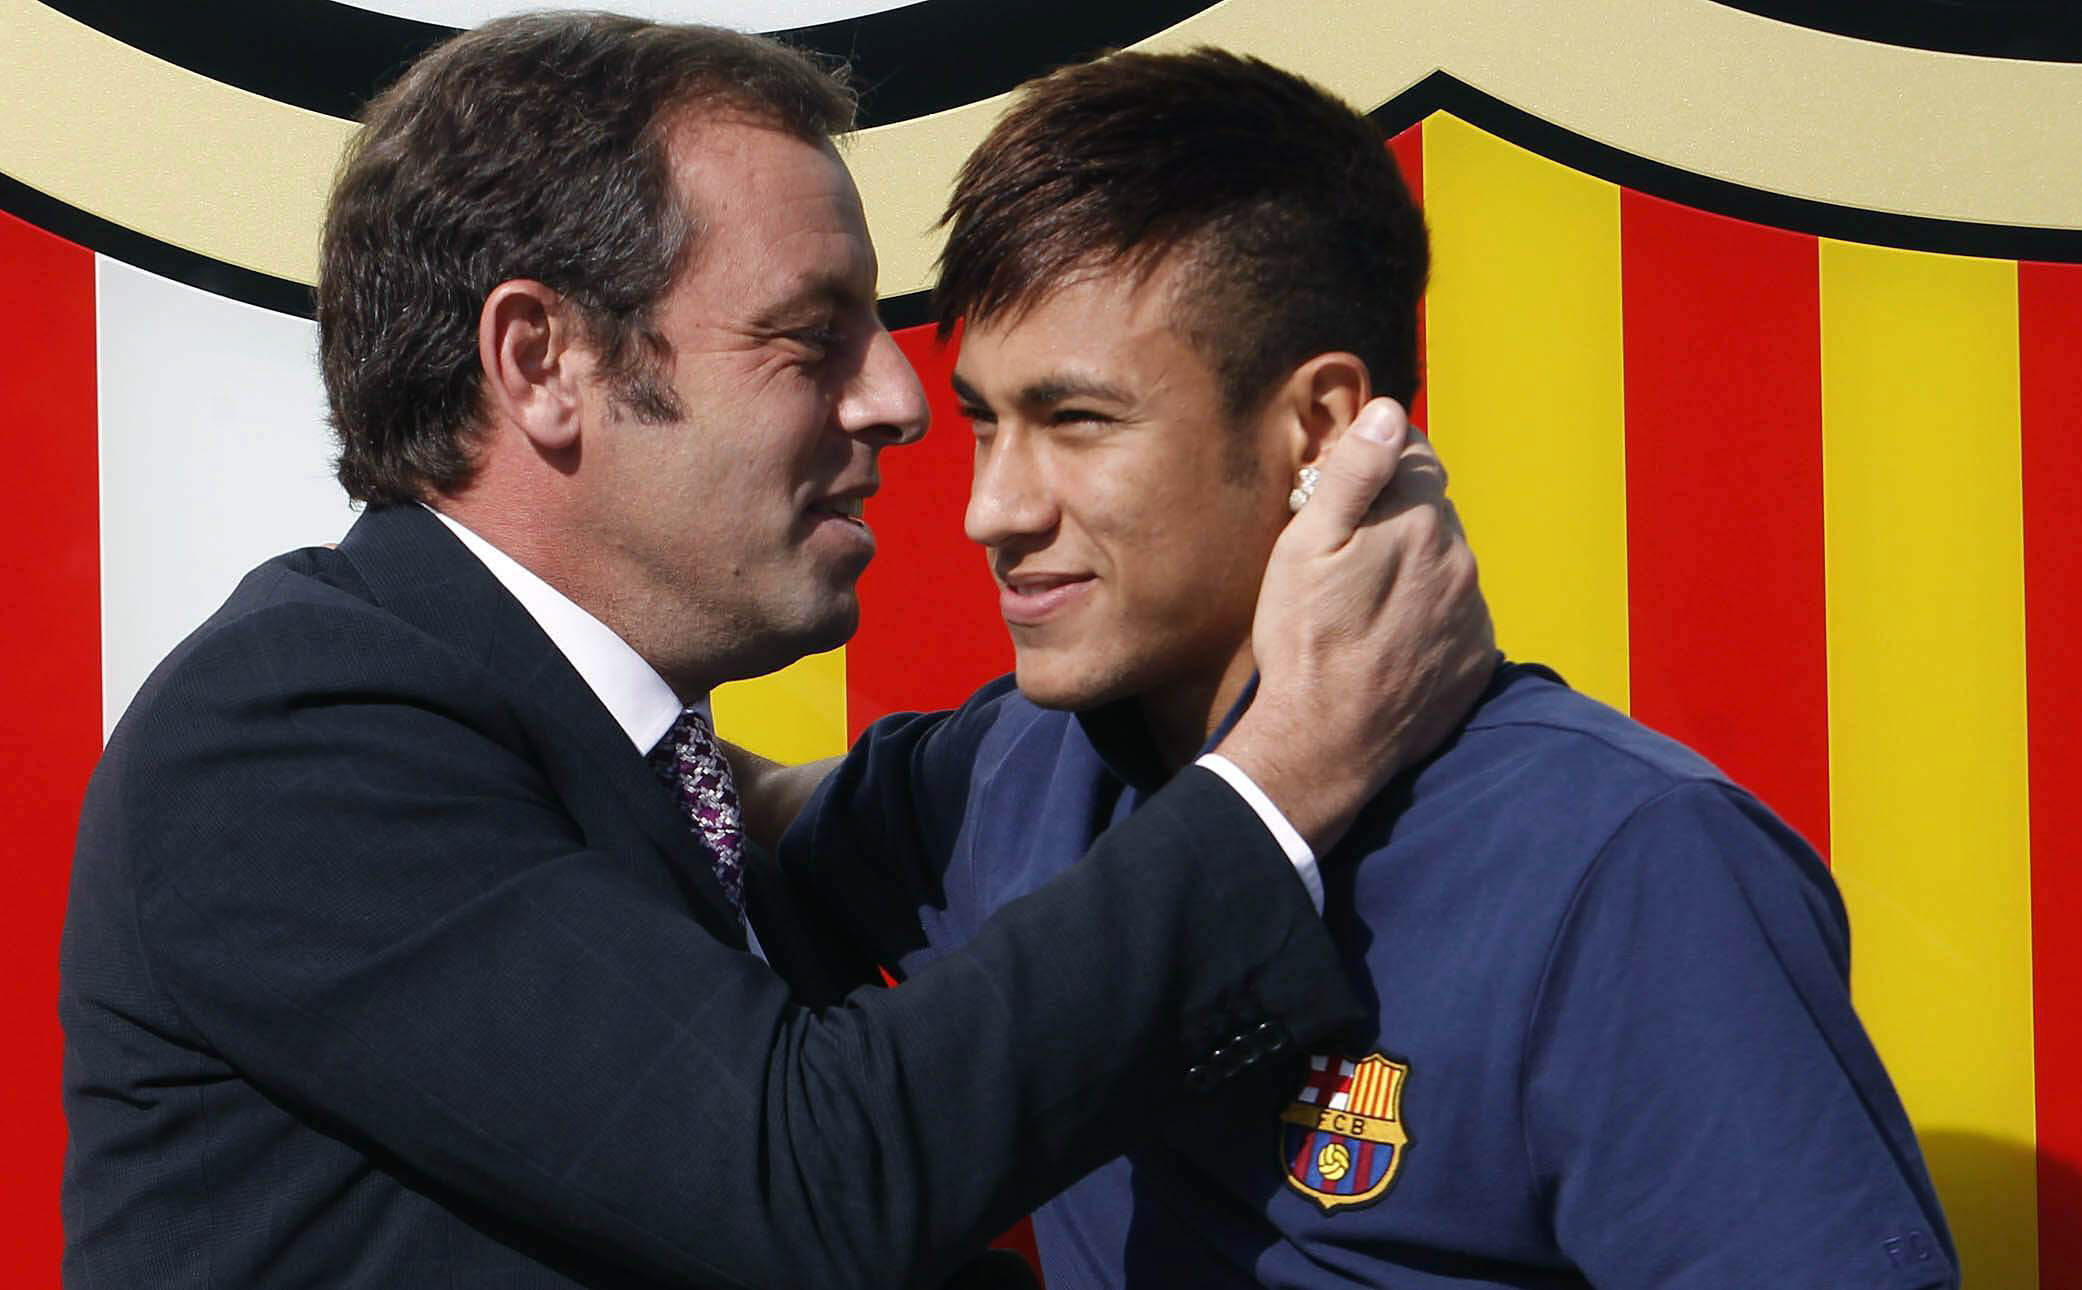 La Agencia Tributaria culpa al Barça de fraude fiscal en el fichaje de Neymar